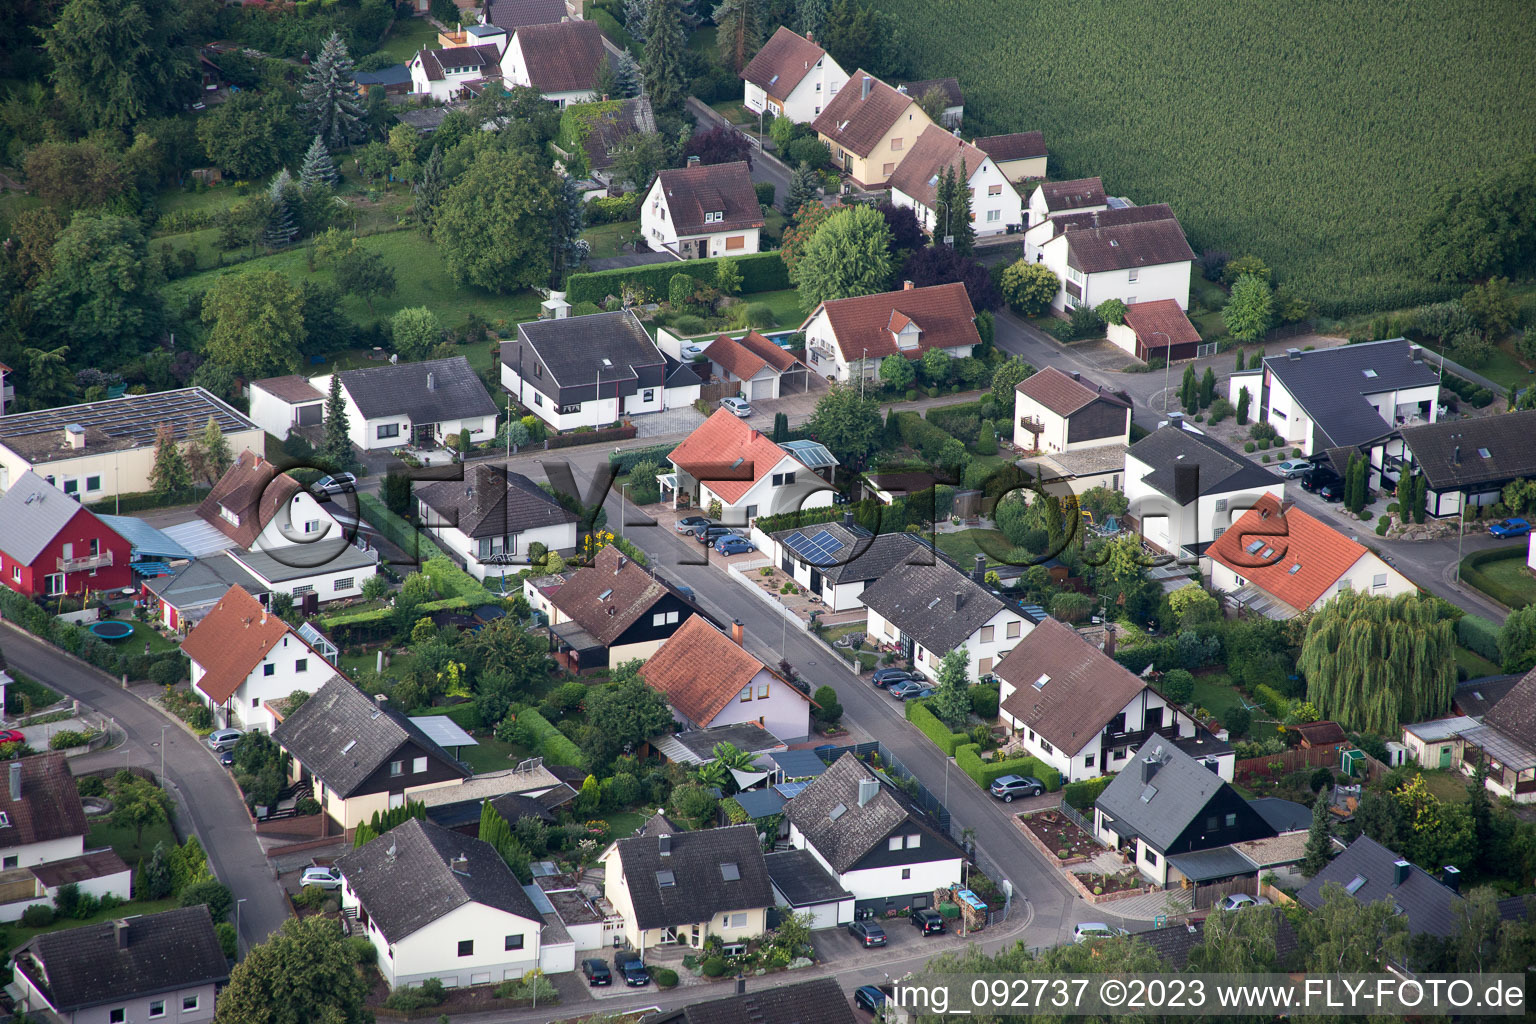 Maxburgstr in the district Billigheim in Billigheim-Ingenheim in the state Rhineland-Palatinate, Germany out of the air